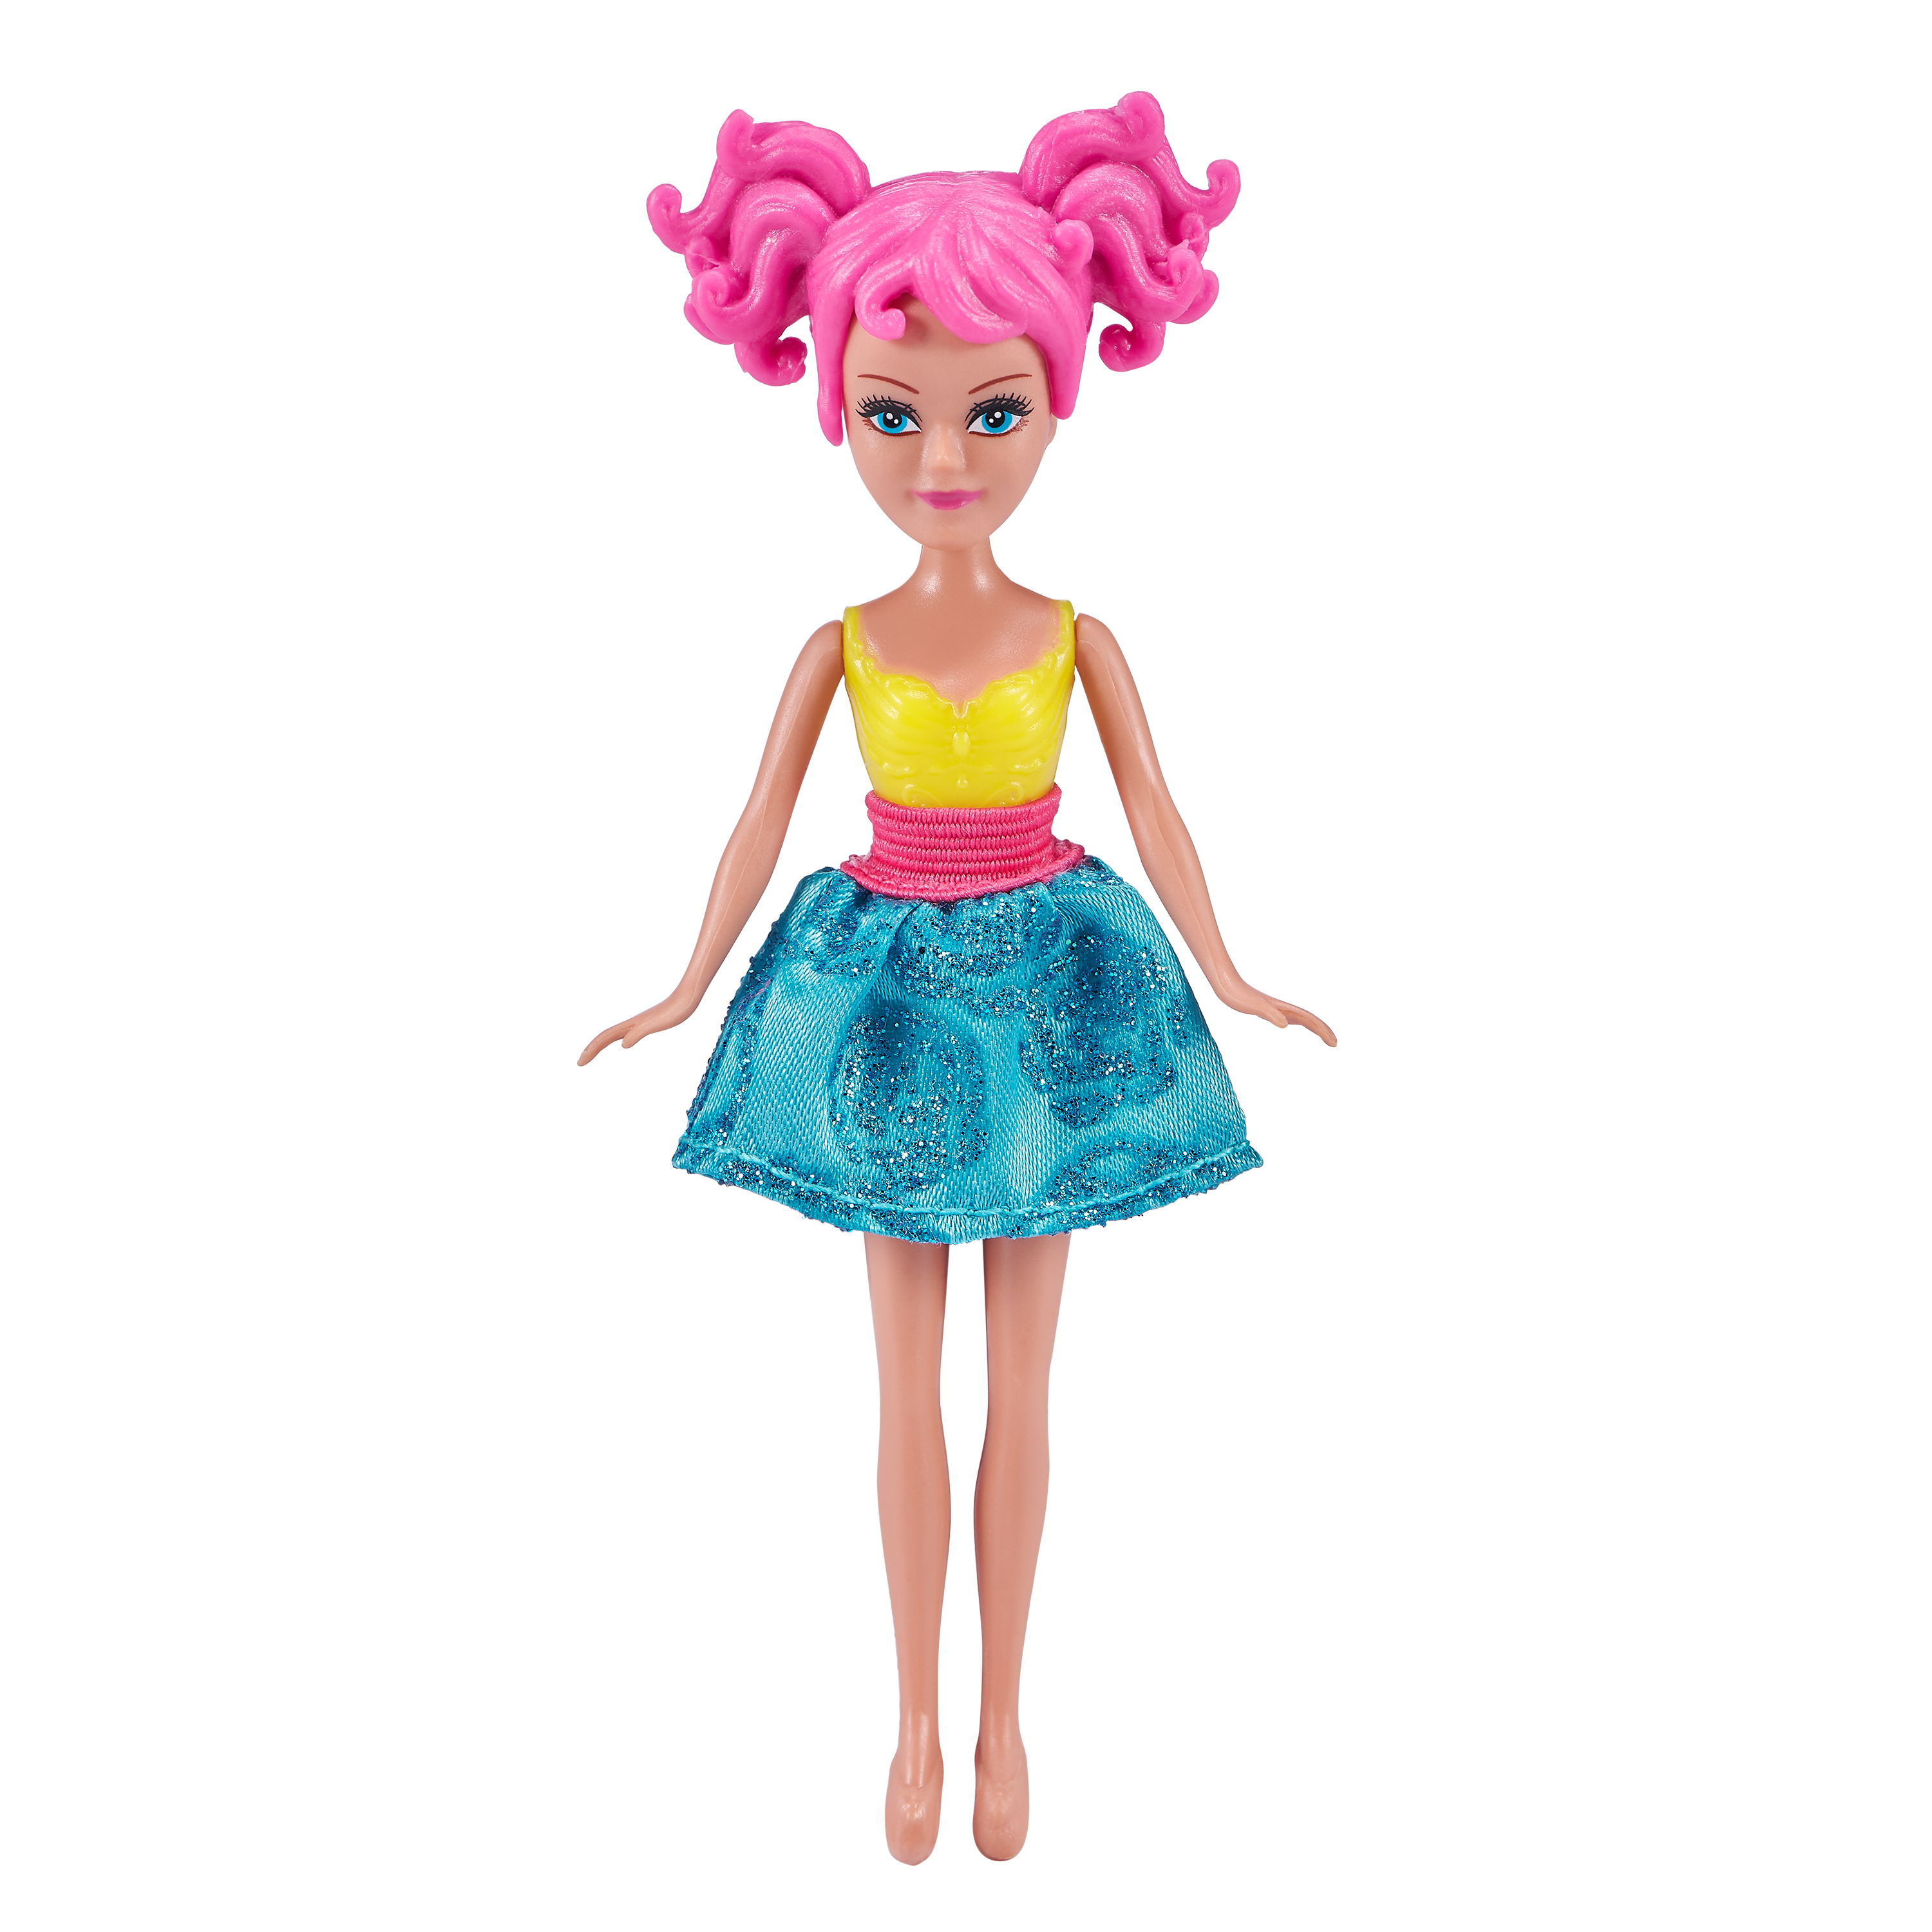 Sparkle Girlz Fancy Cone Fashion Doll - image 1 of 11